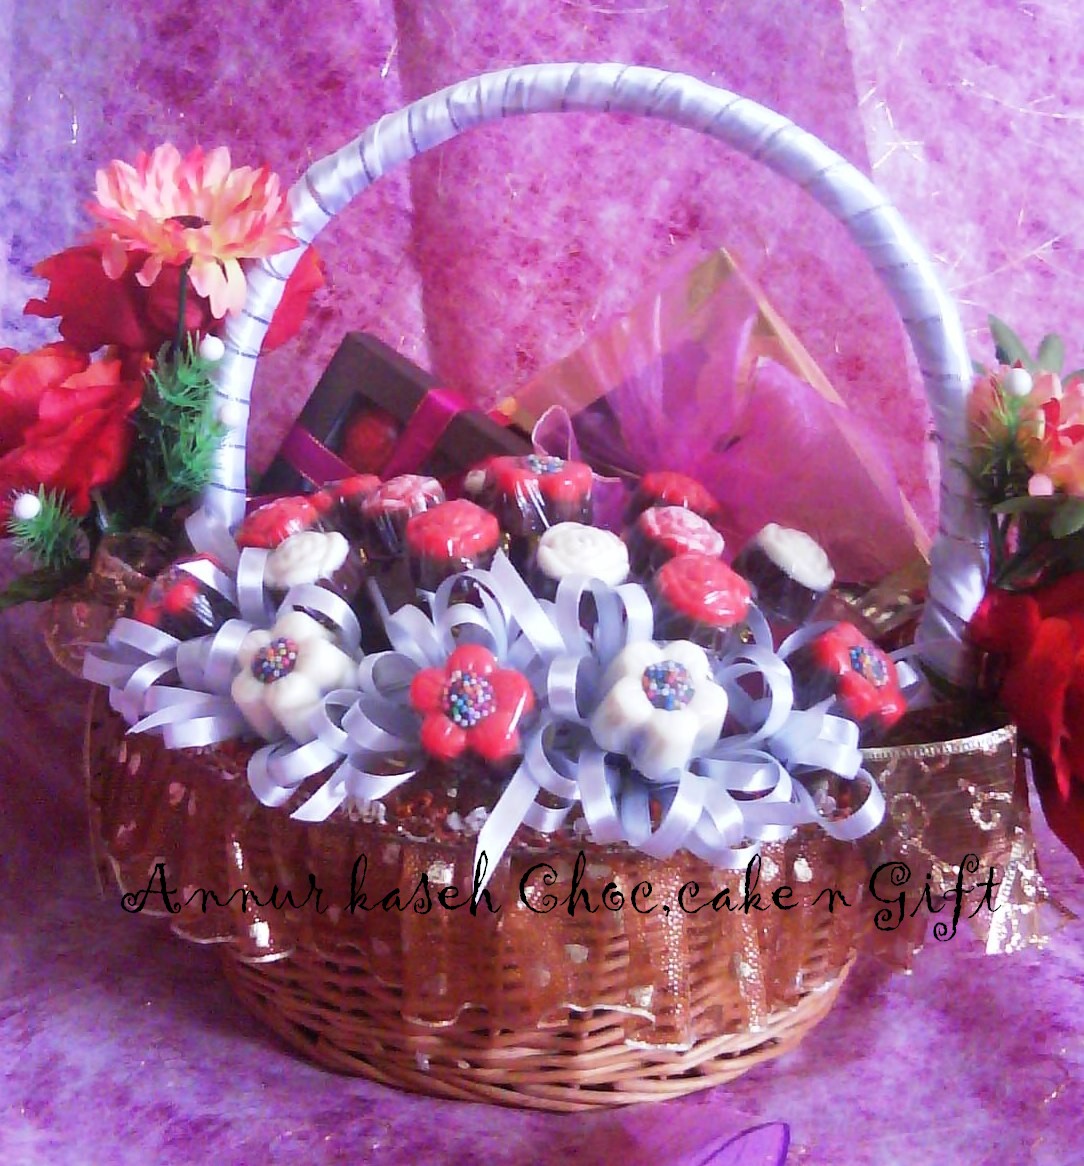 Annur Kaseh Choc cake and Gift gubahan coklat 